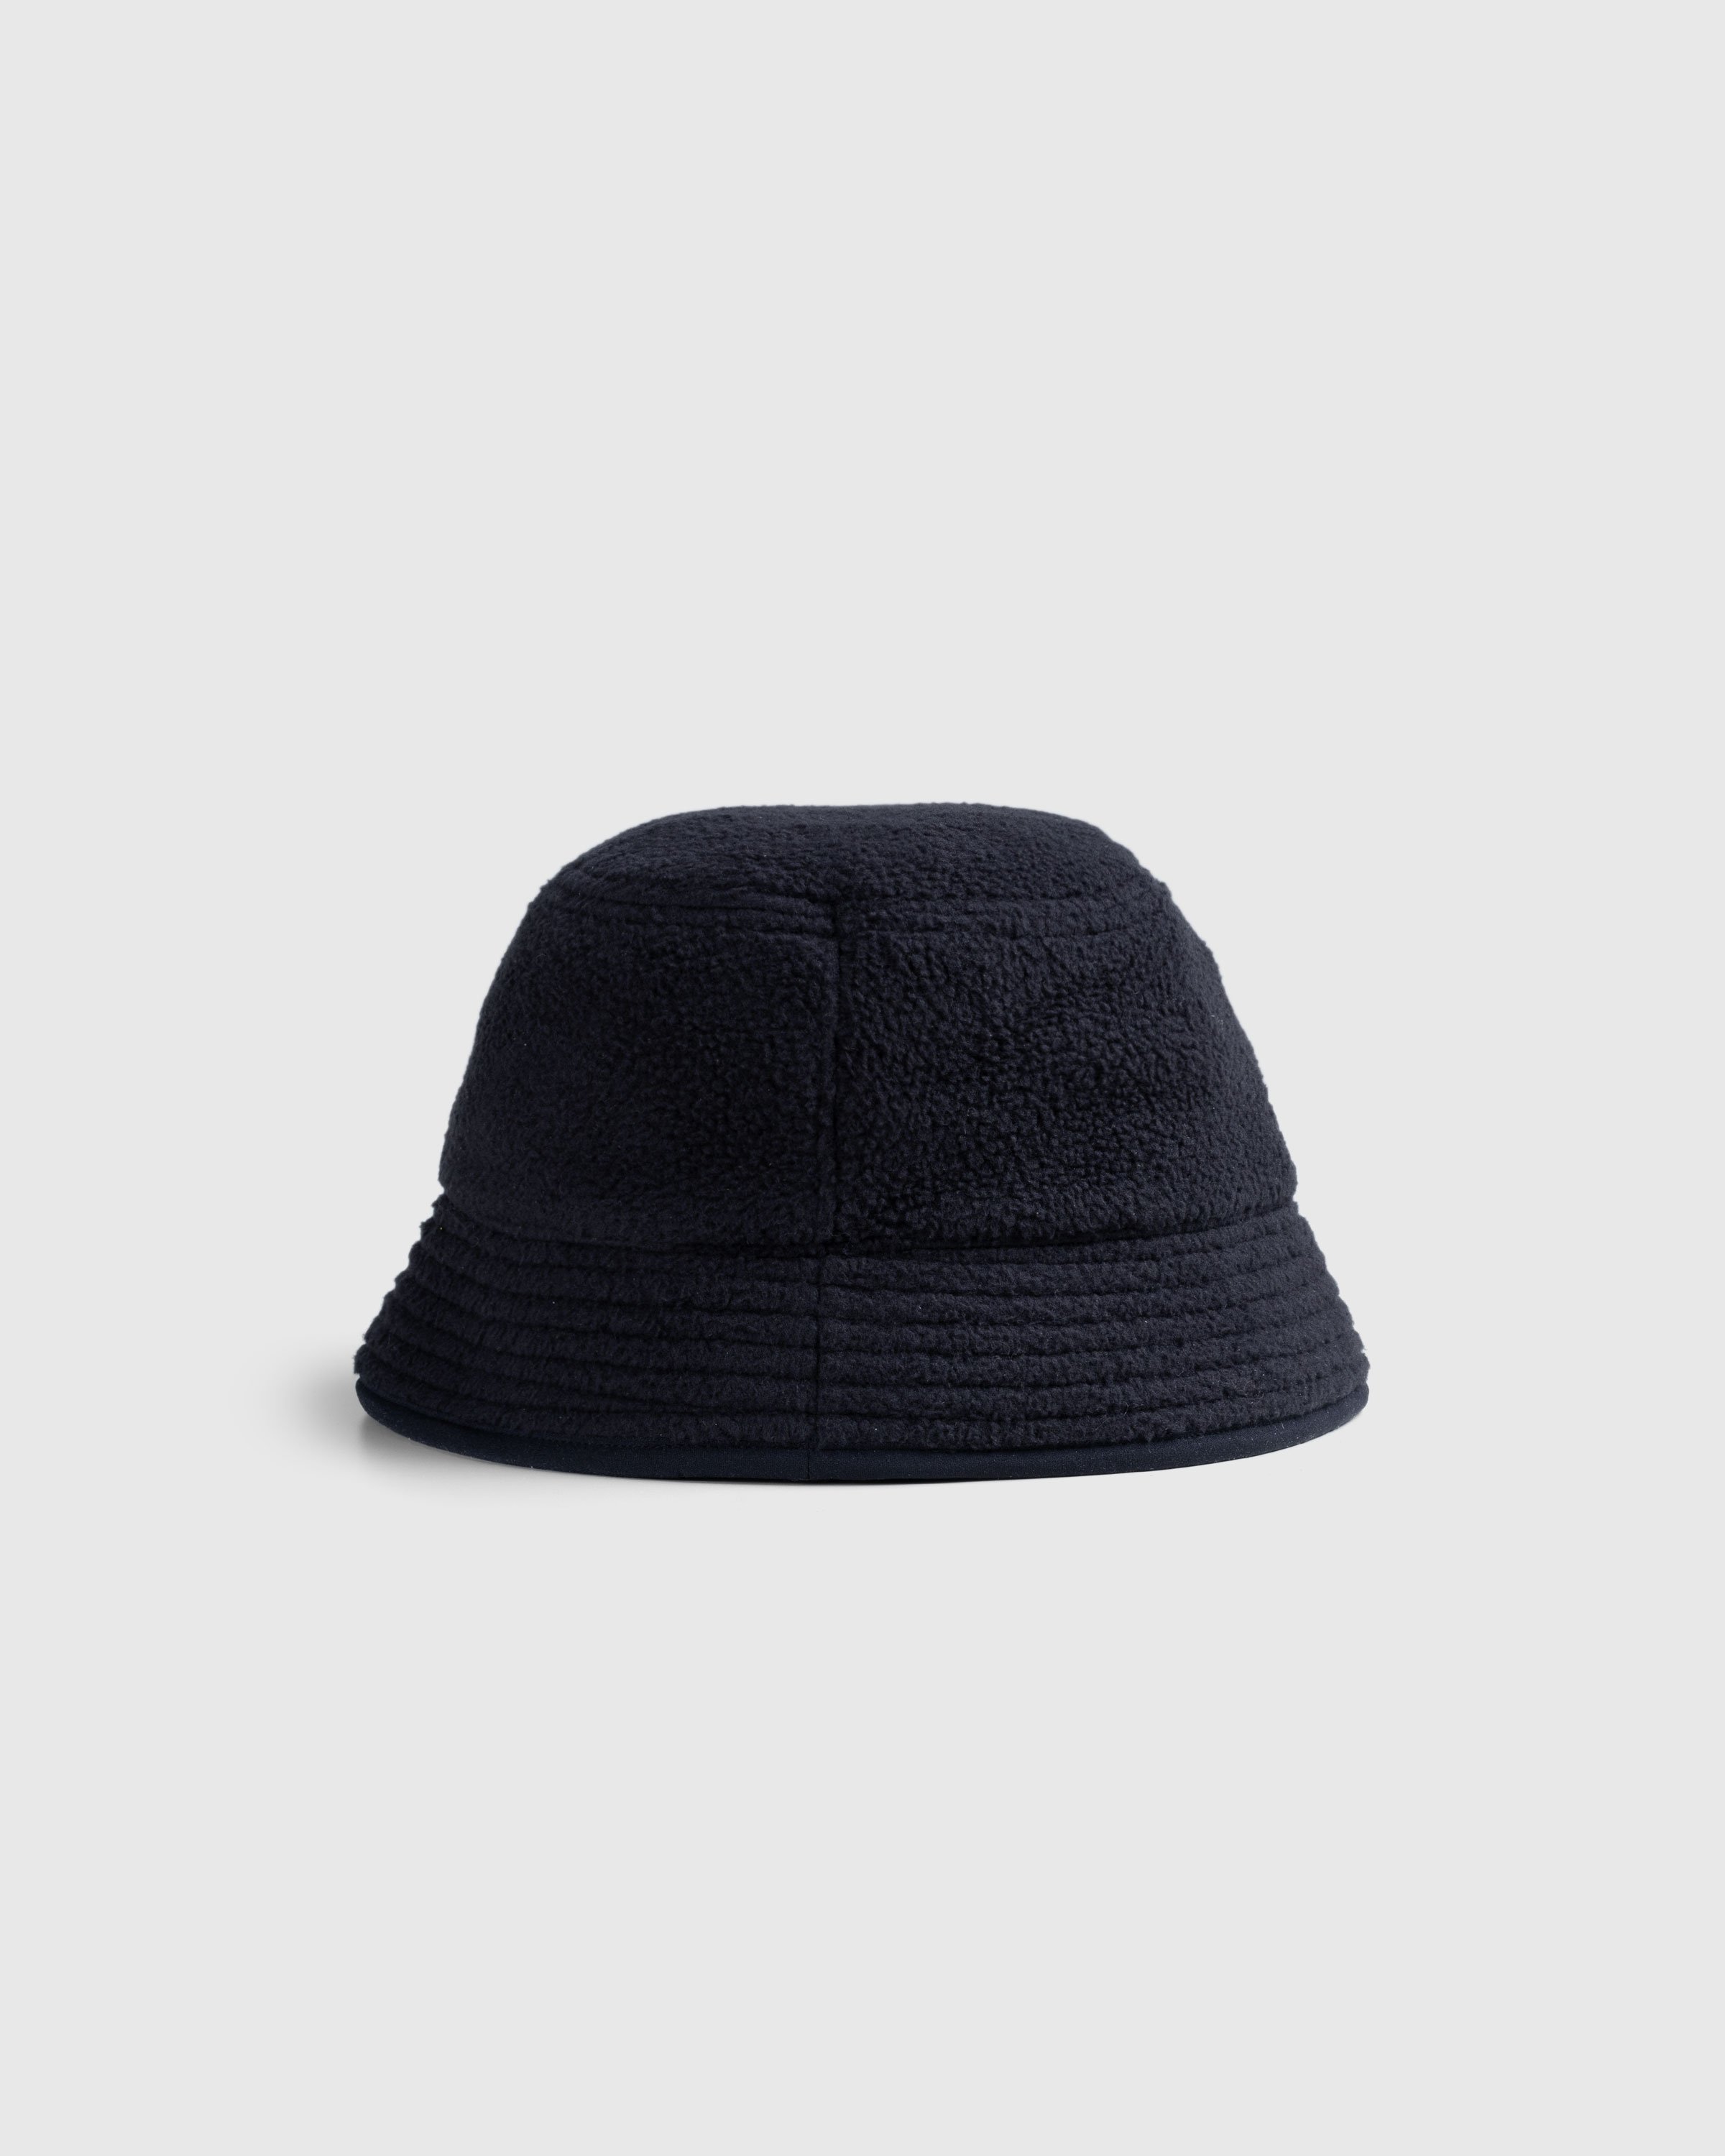 The North Face - Fleeski Street Bucket Hat Black - Accessories - Black - Image 3